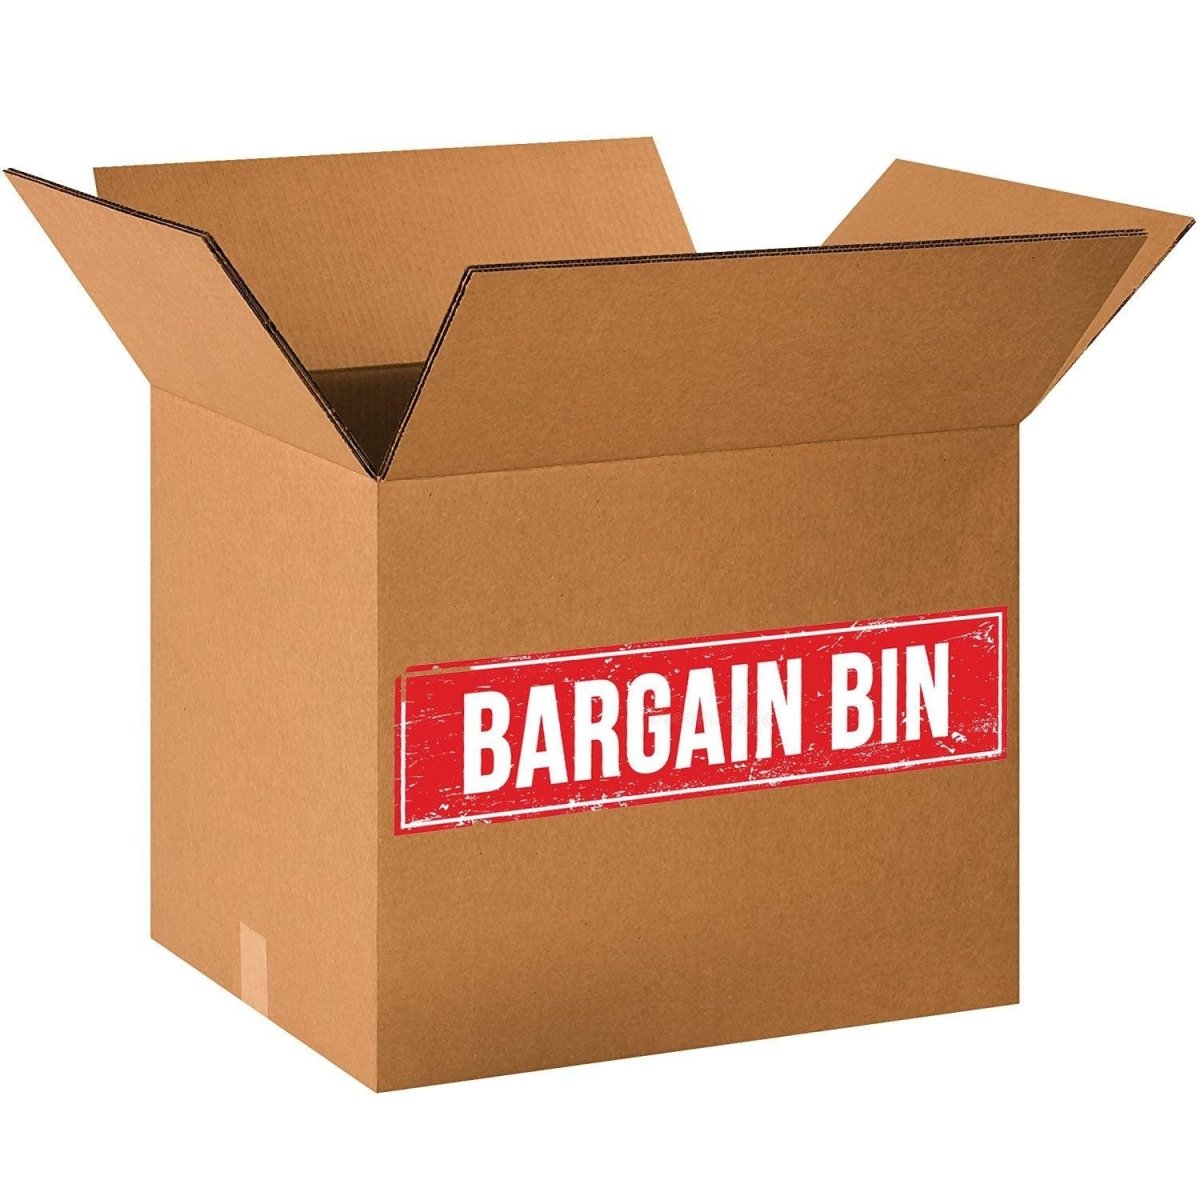 bargain bin - Hilltop Packs LLC